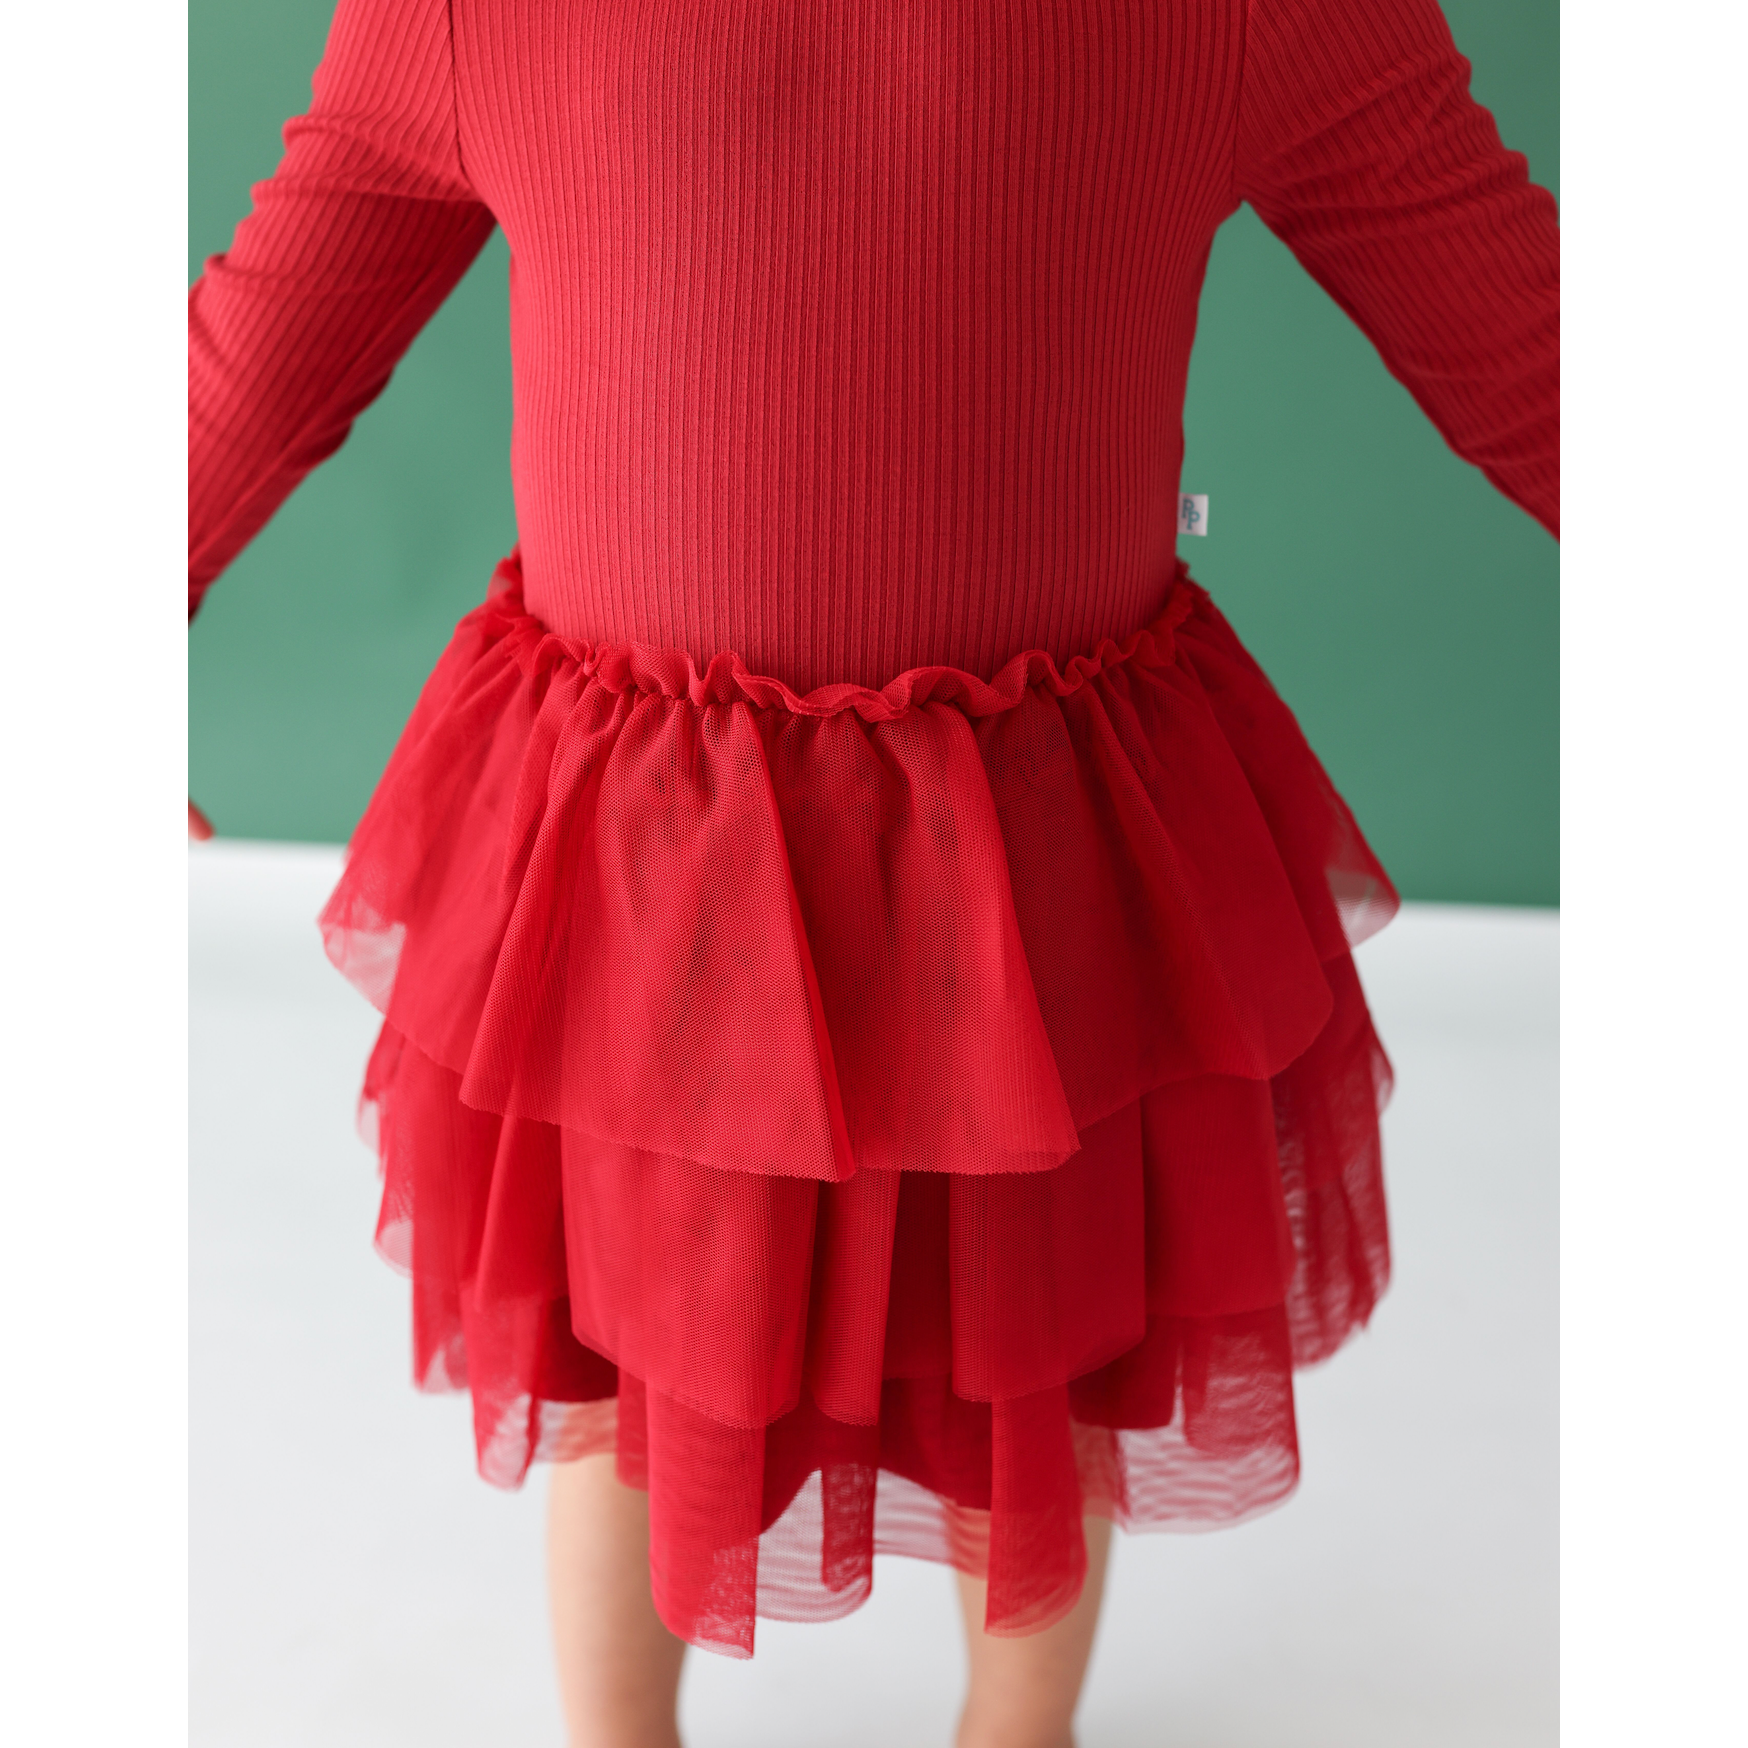 Posh Peanut Dark Red Ribbed Long Sleeve Tulle Dress-POSH PEANUT-Little Giant Kidz